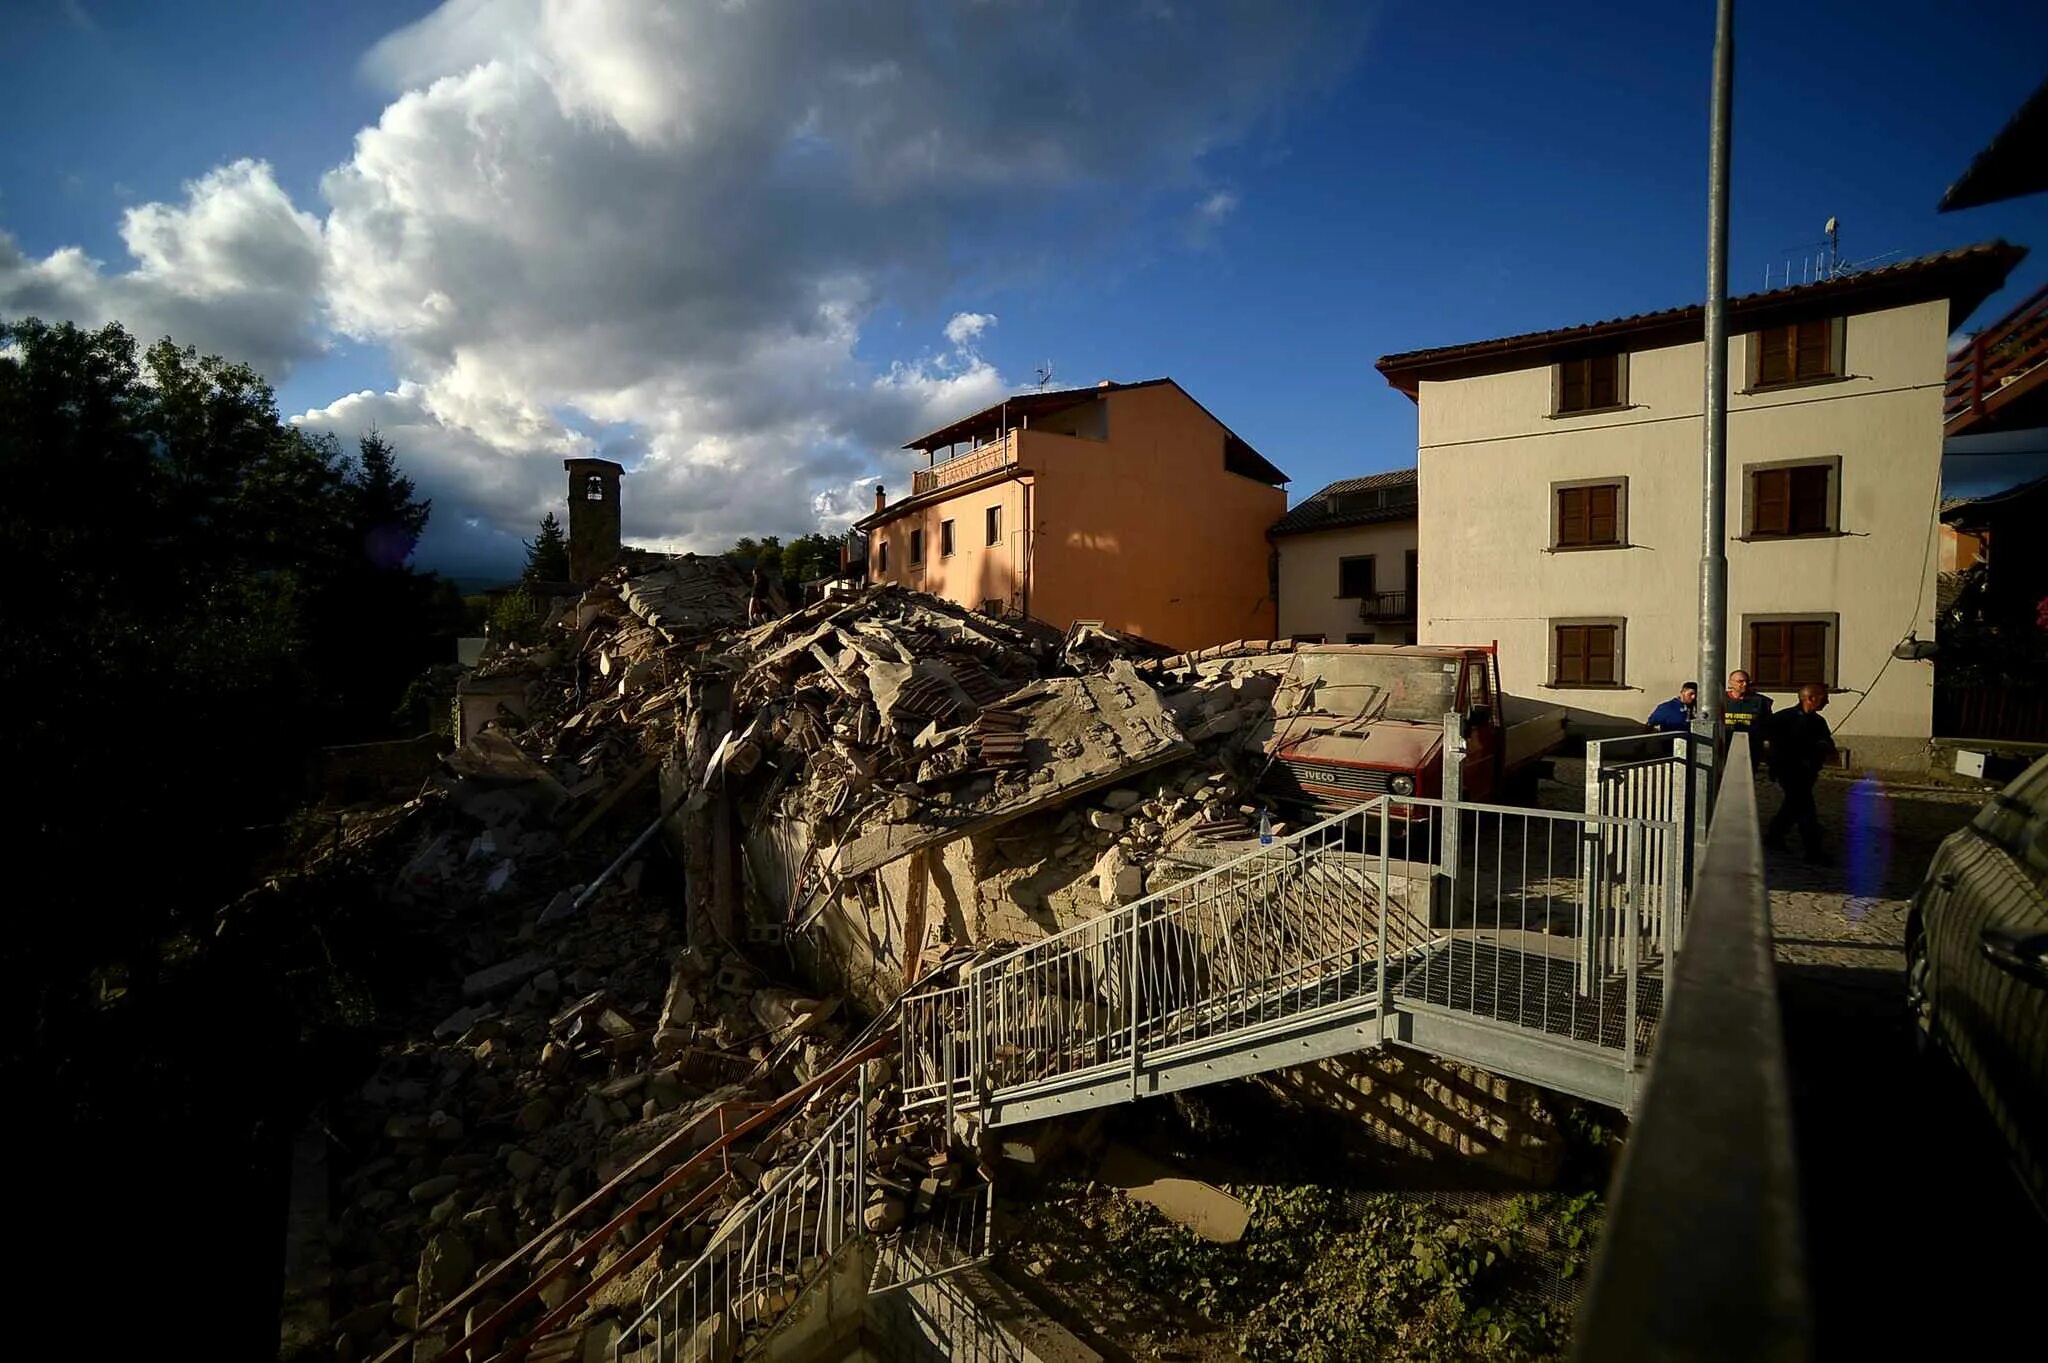 Аматриче сейчас. Сегодняшнее землетрясение в Италии. Аматриче. Италия Урбино землетрясение сегодня.